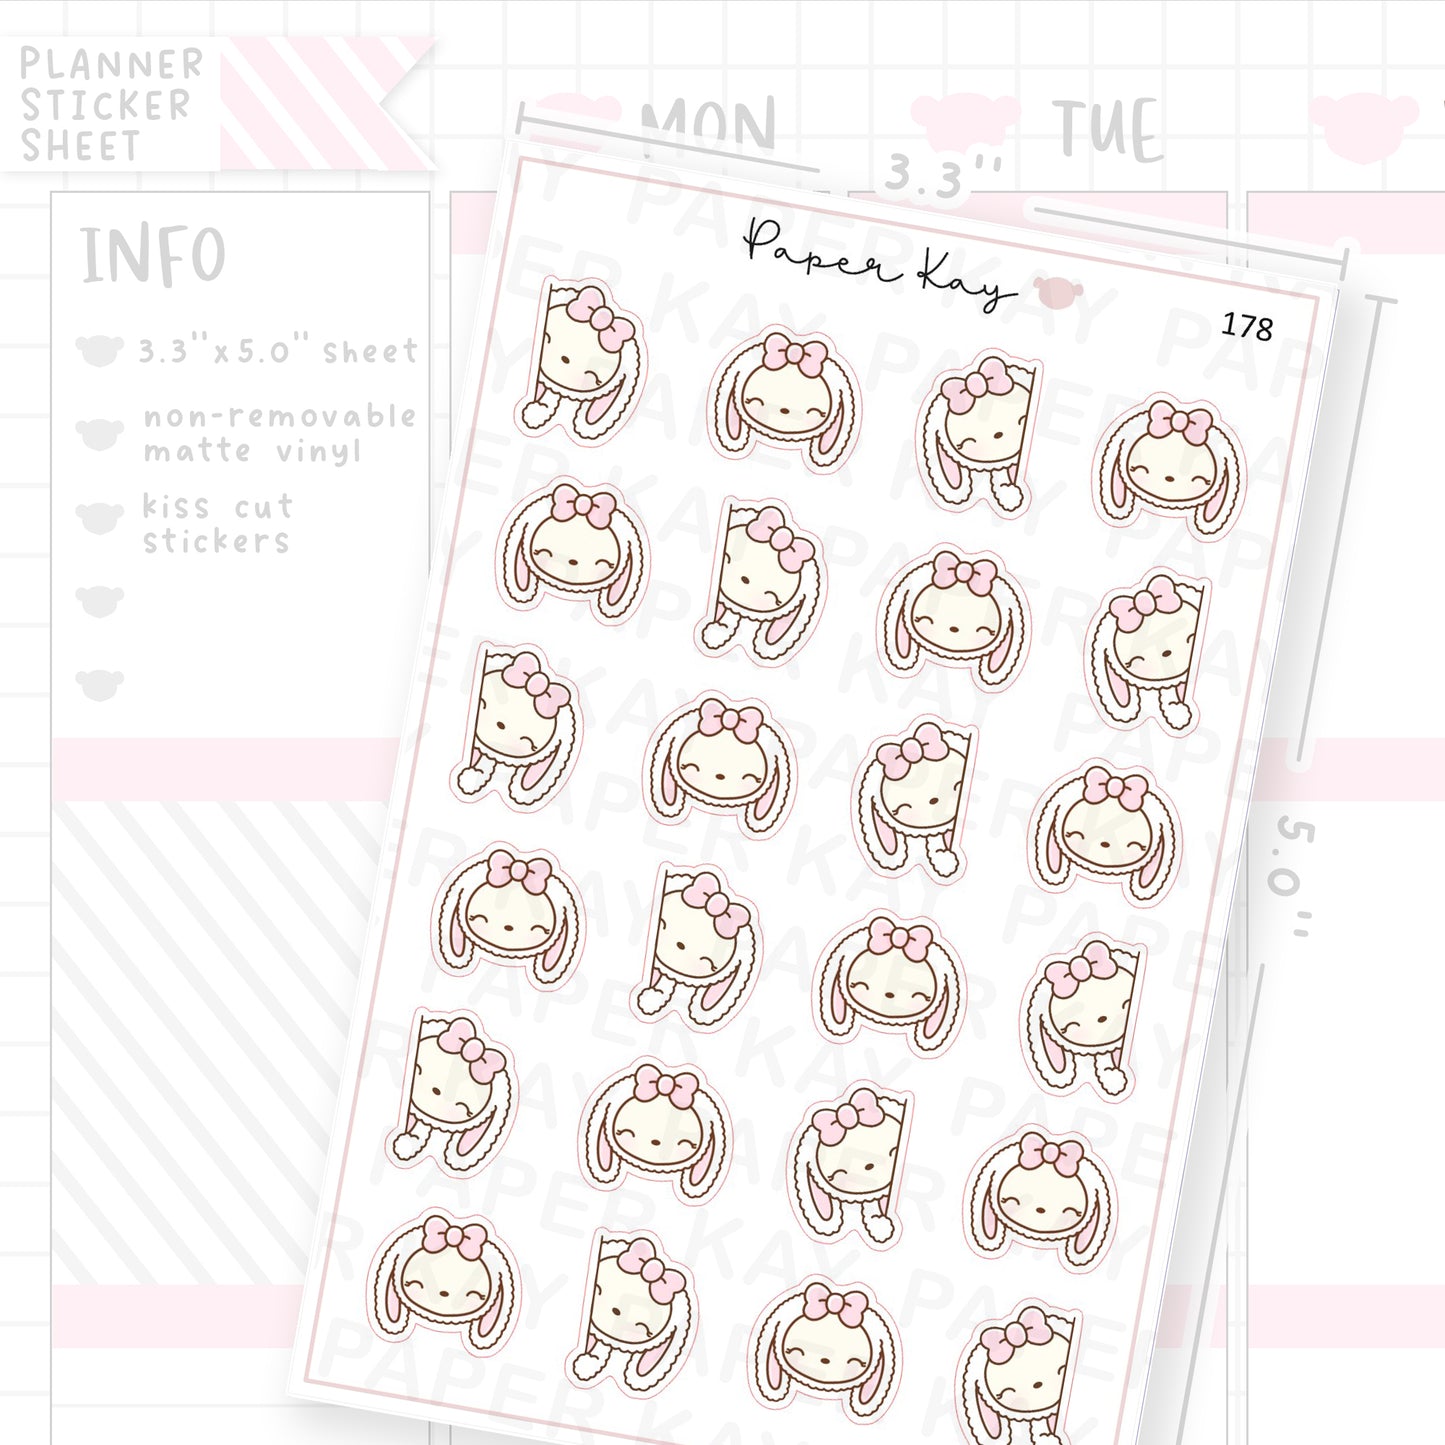 Planner Bunny - Peek-a-boo Sticker Sheet